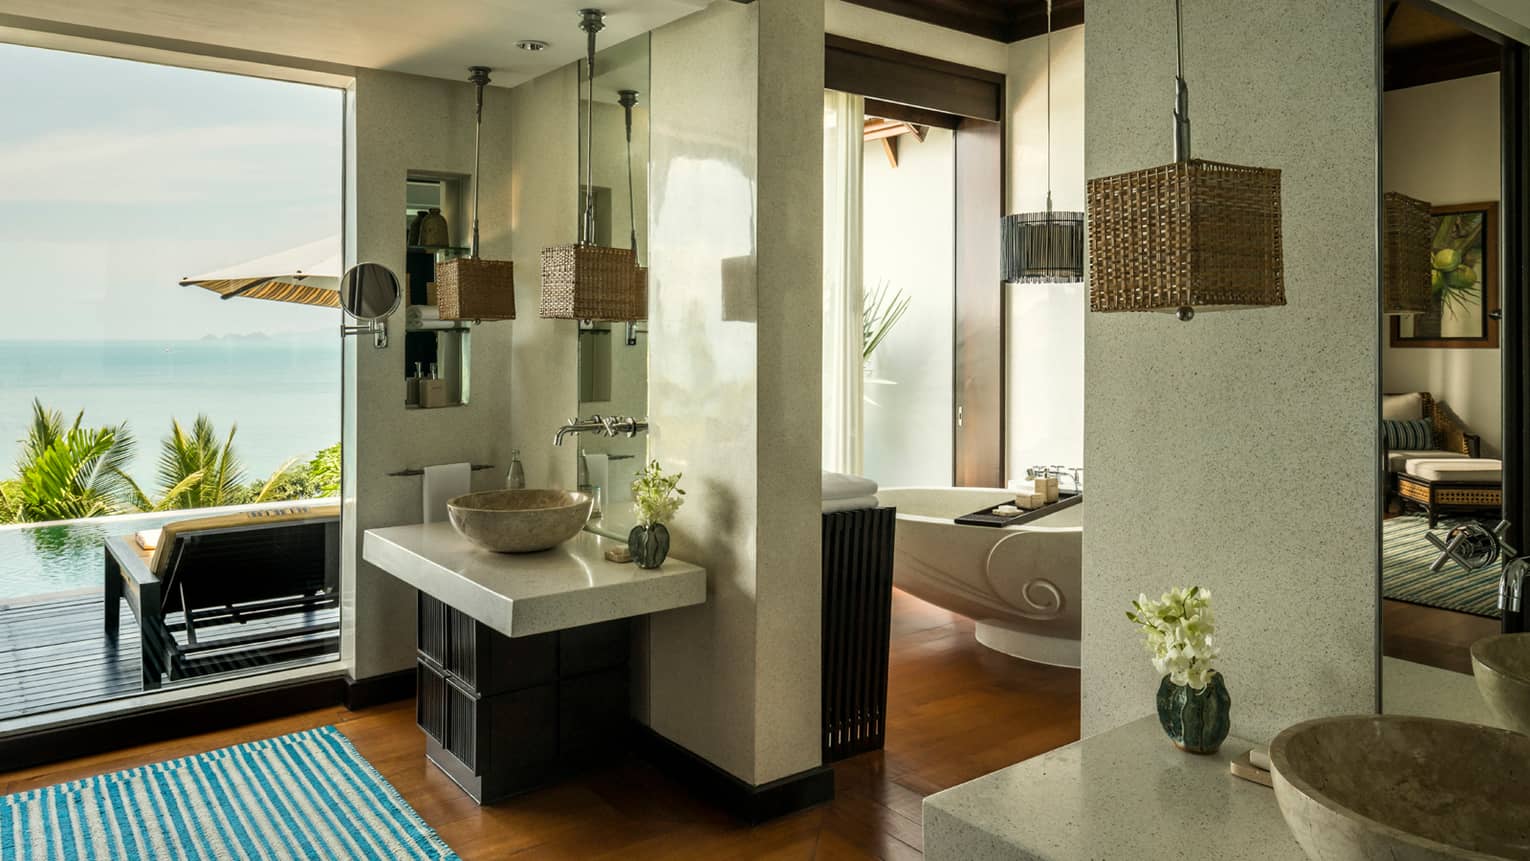 Villa bathroom with double marble sinks, freestanding tub, floor-to-ceiling window